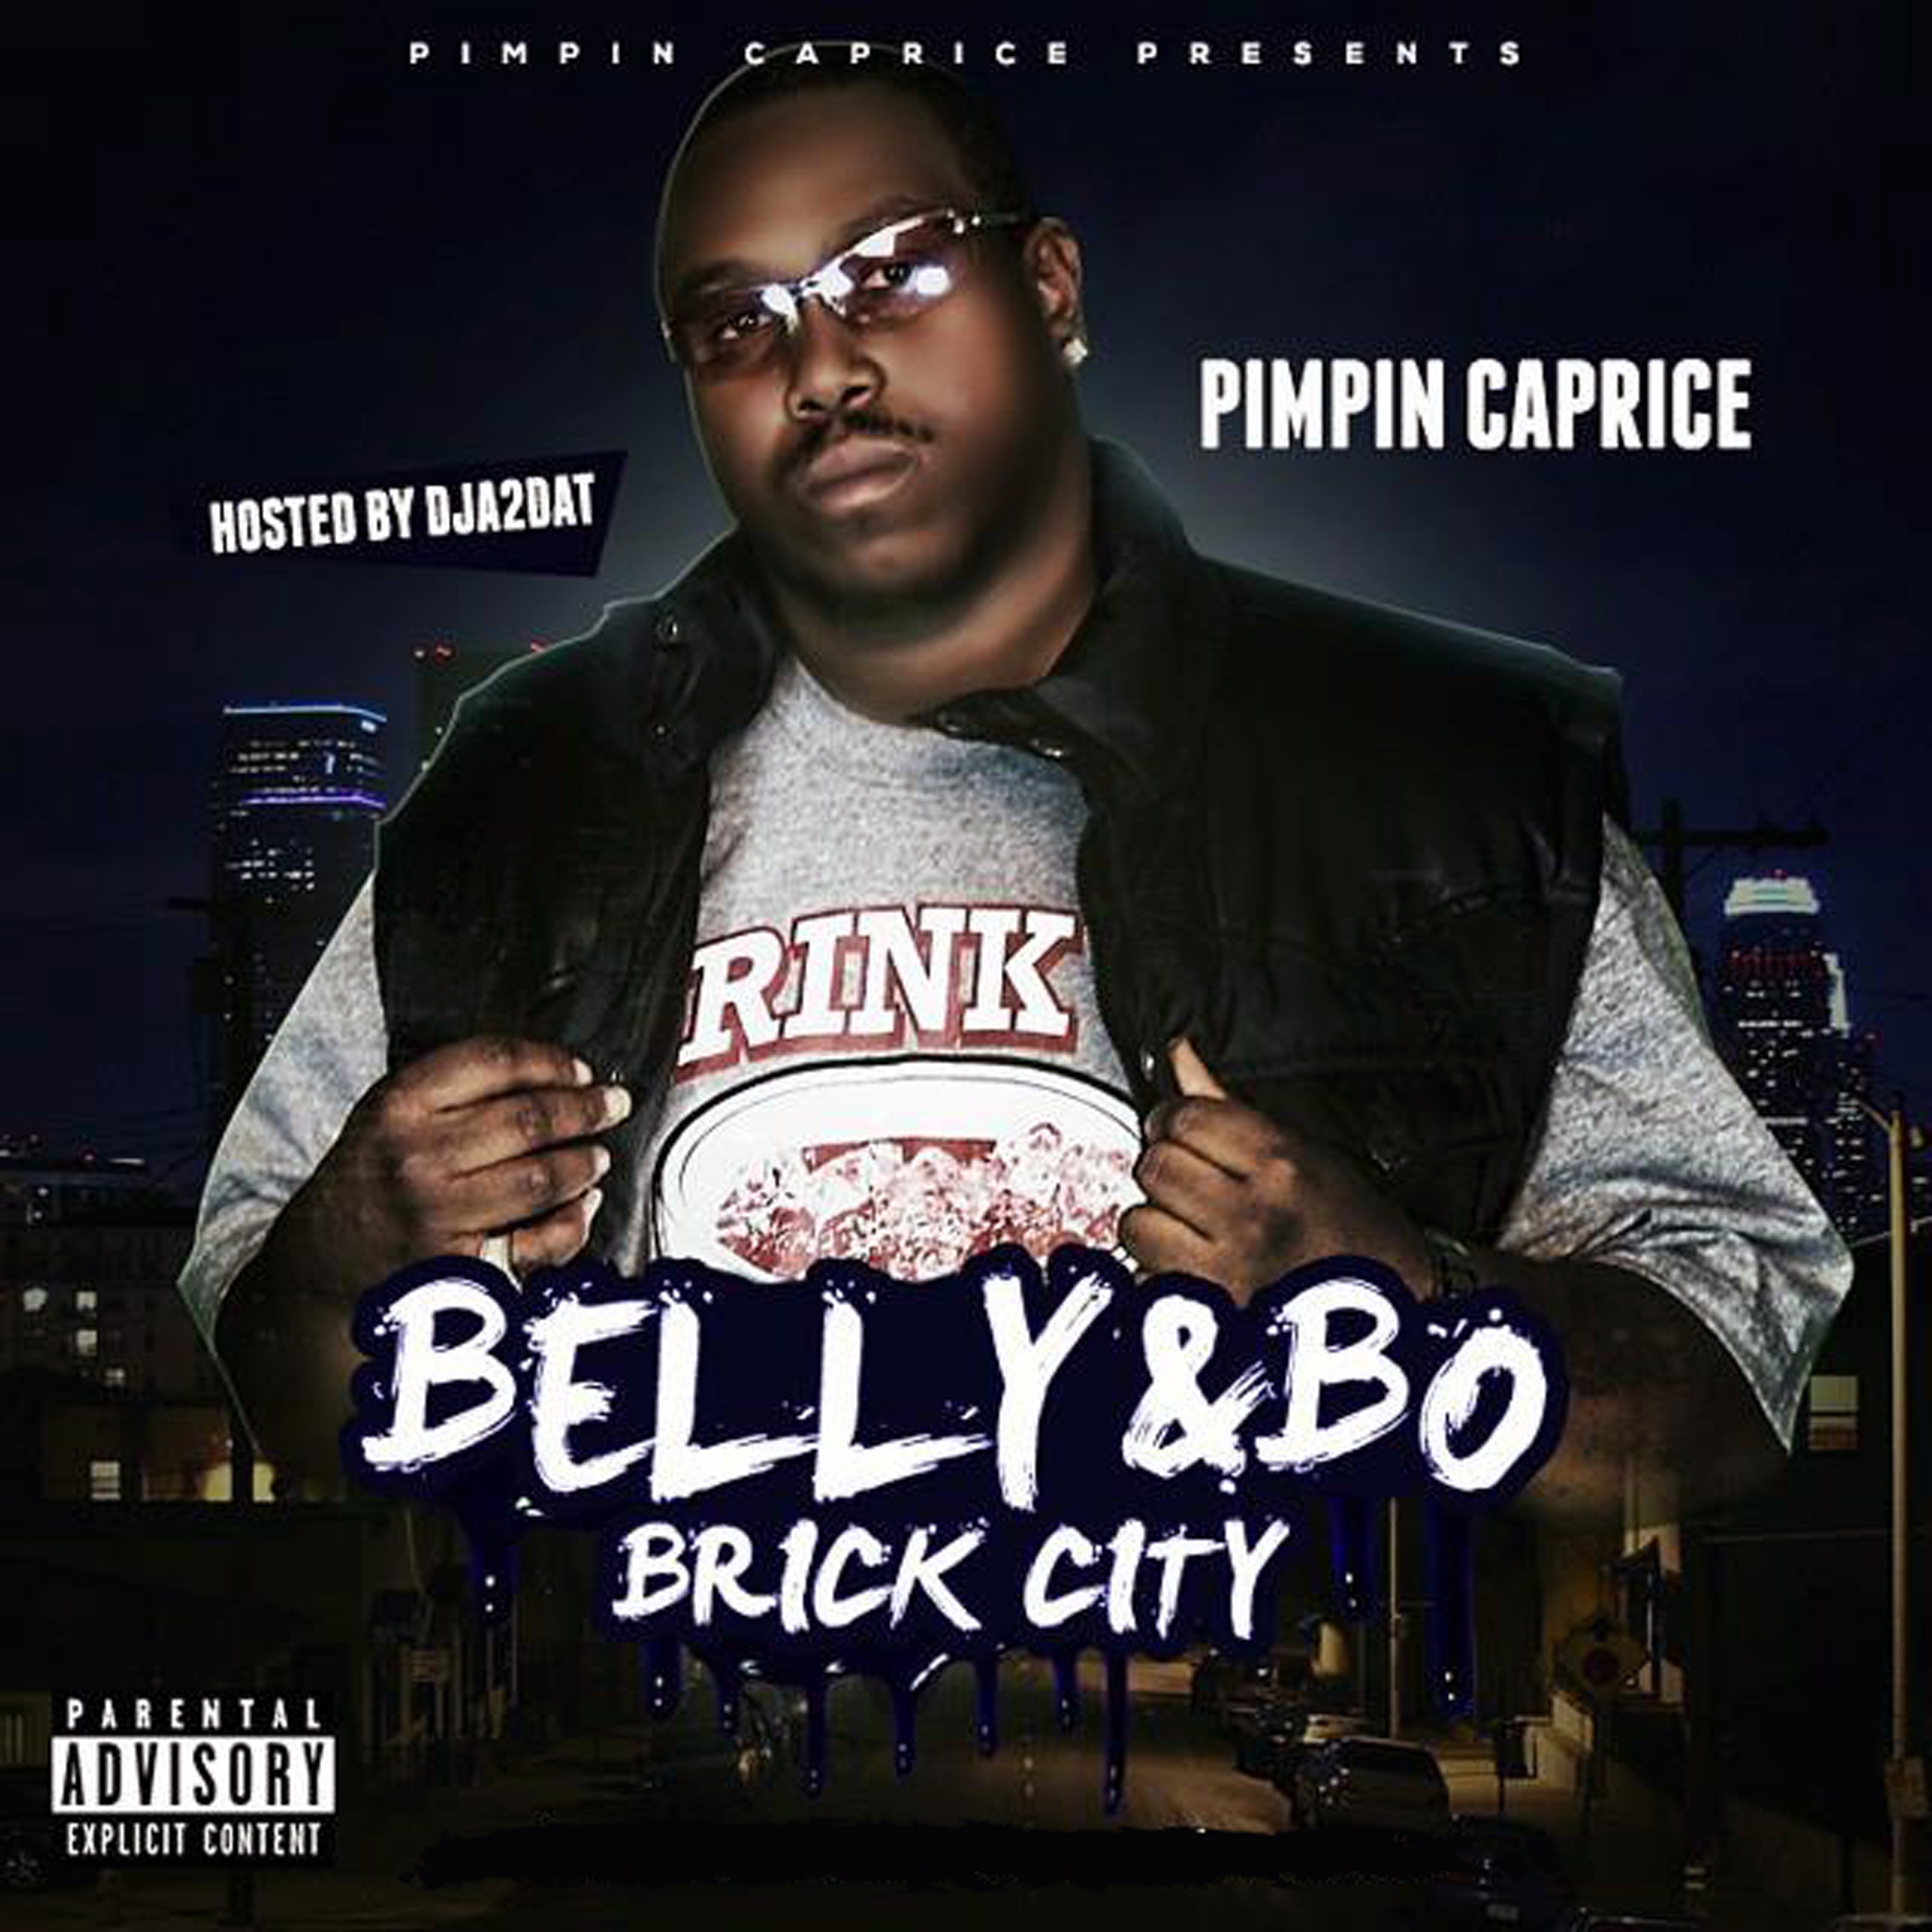 Belly & Bo Brick City